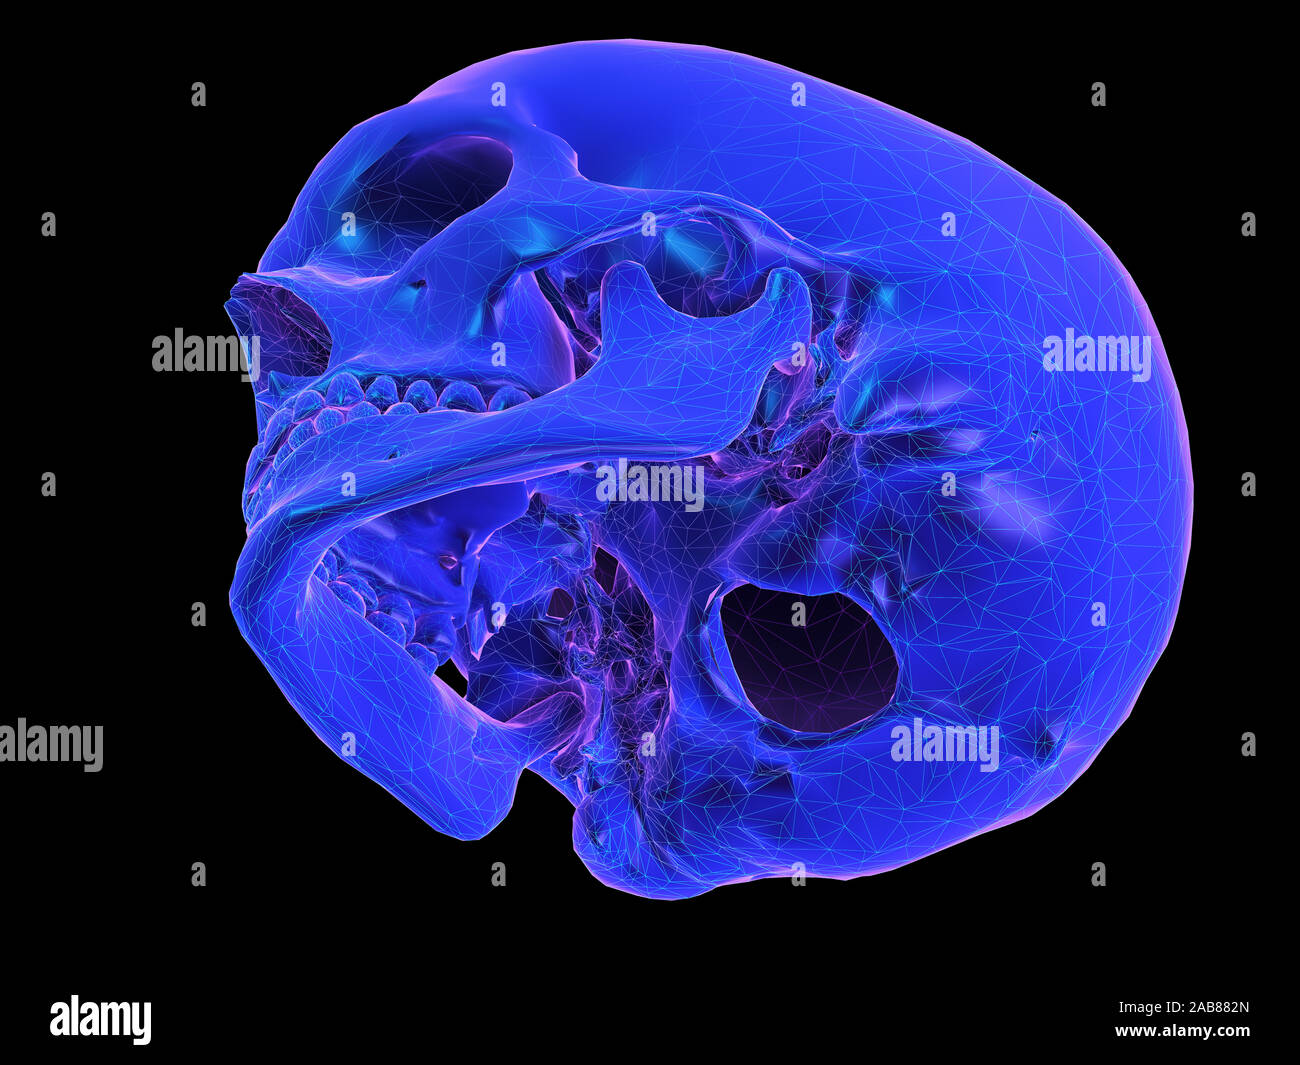 Rendu 3D abstract style synthwave illustration d'un crâne humain Banque D'Images